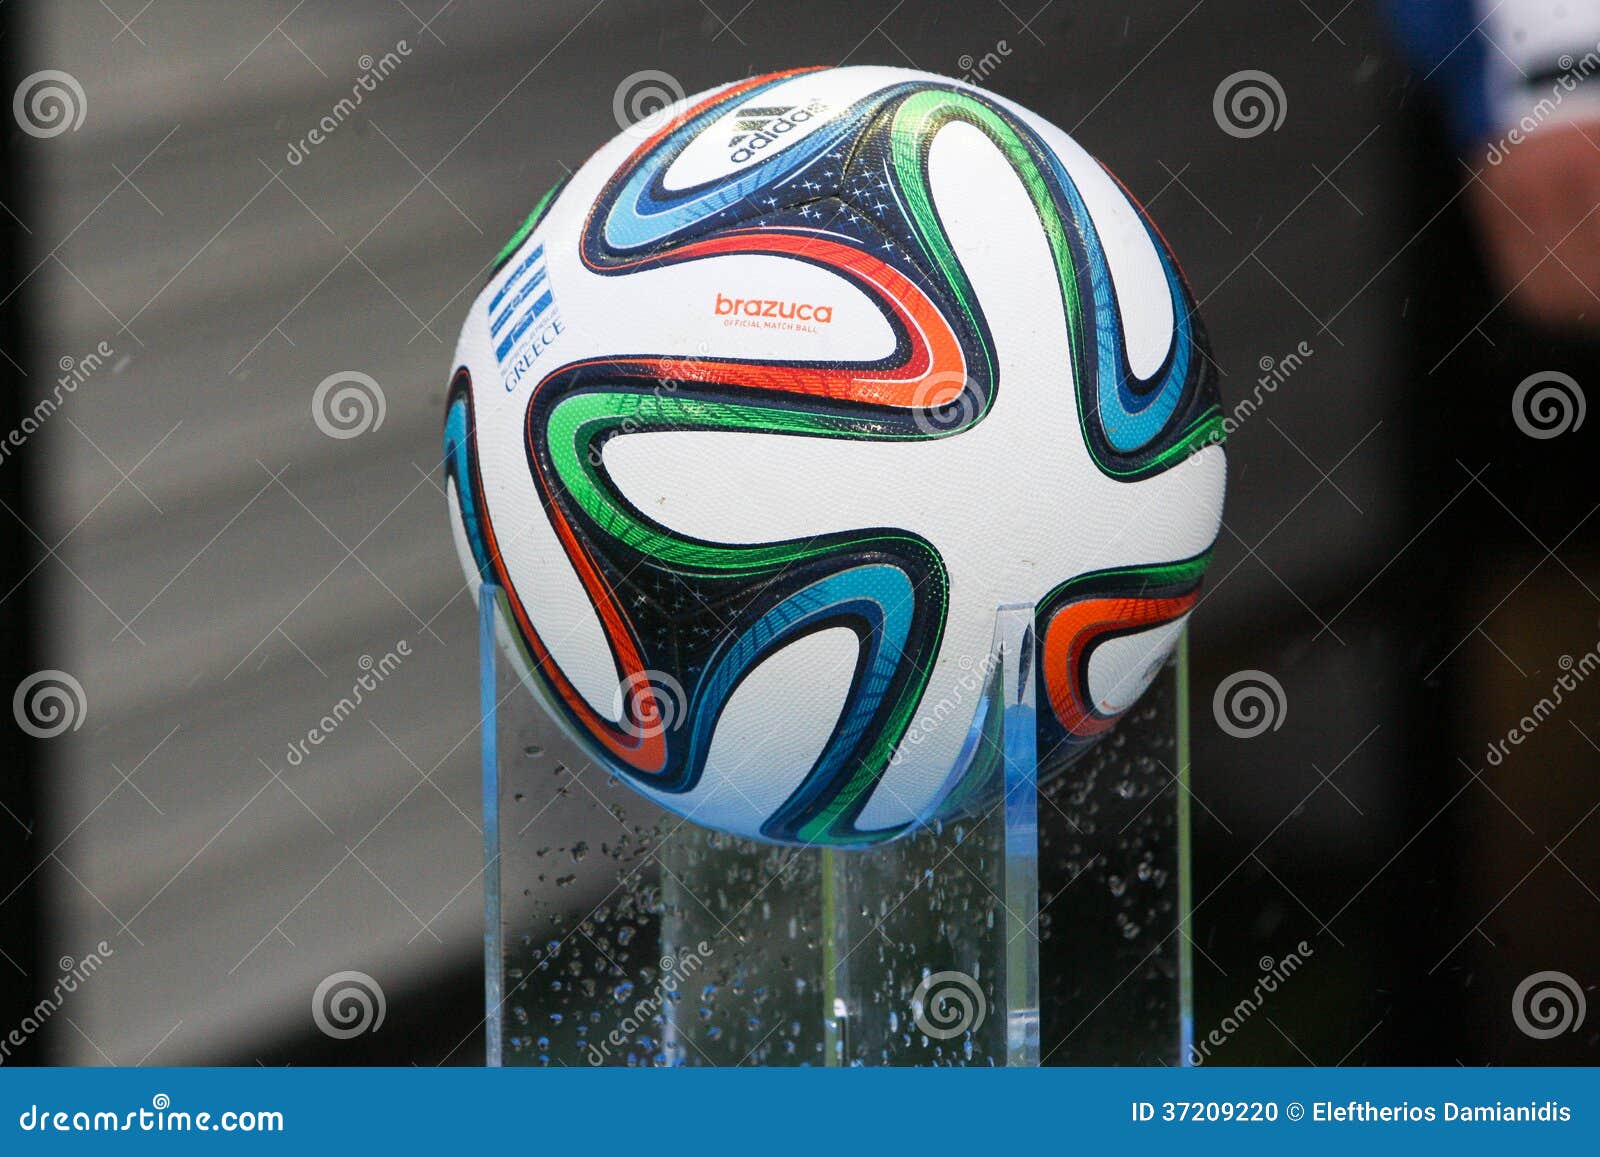 Mundial Brazuca Ball Football ADIDAS Editorial Image - Image of